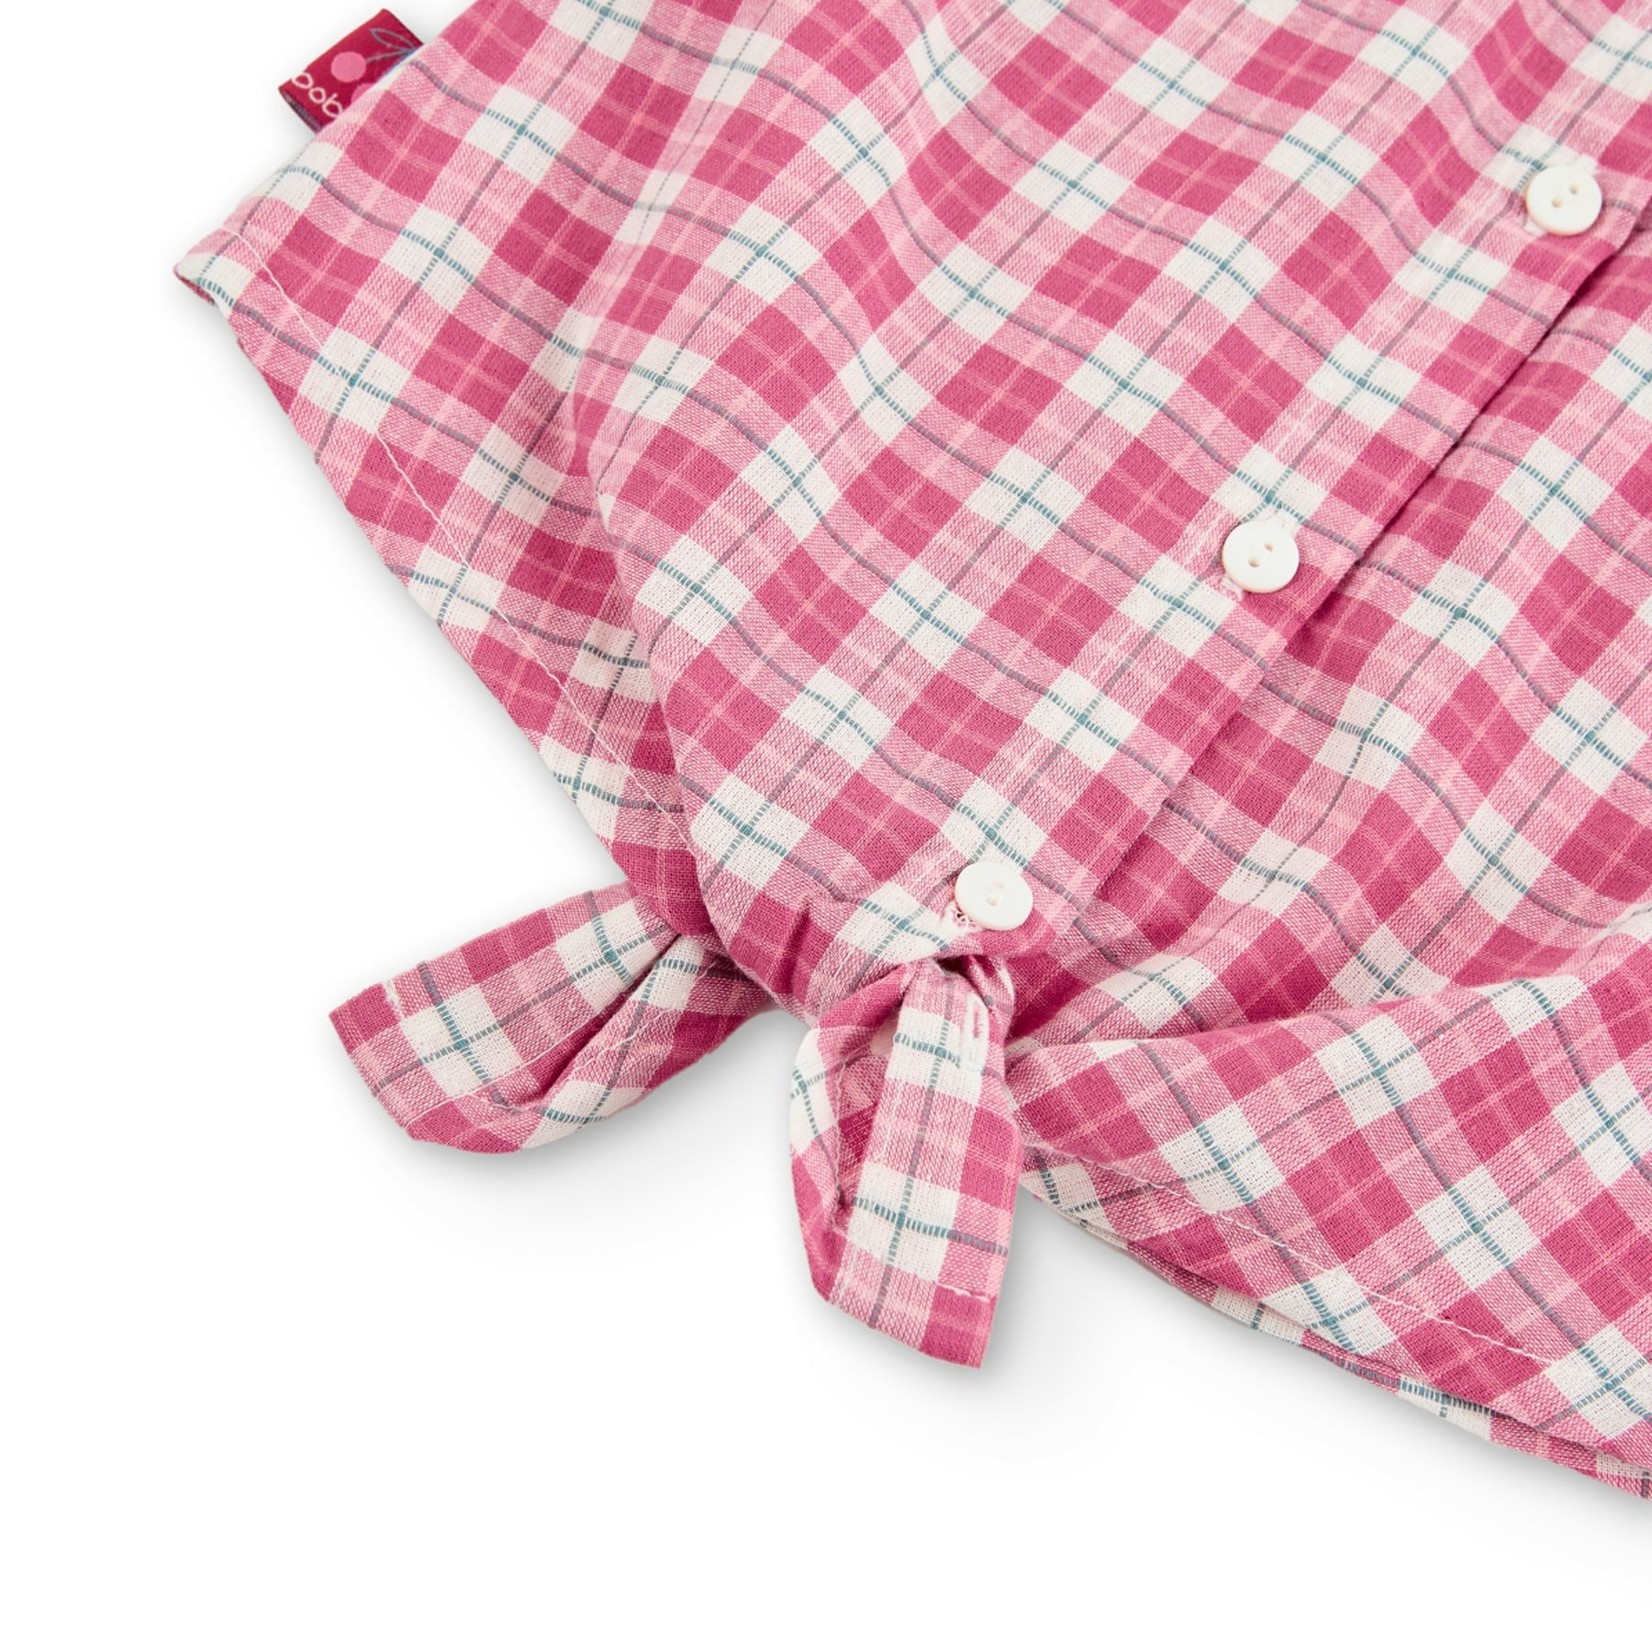 Boboli BOBOLI - Western-style checkered blouse with tie in dark dusty pink